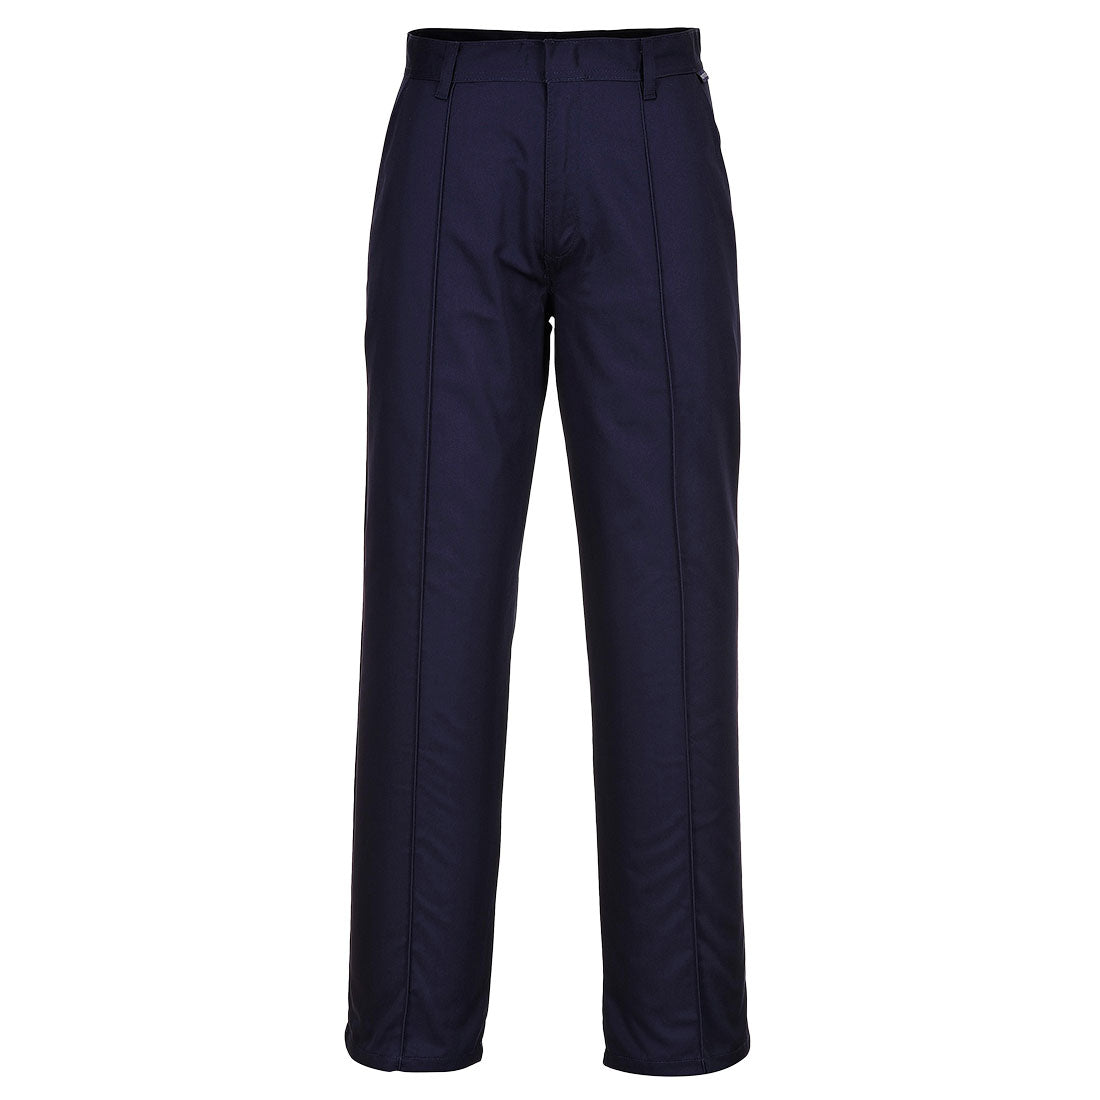 Portwest 2885 - Navy Preston Mens Work Trousers with Side Pockets sz 26" Regular